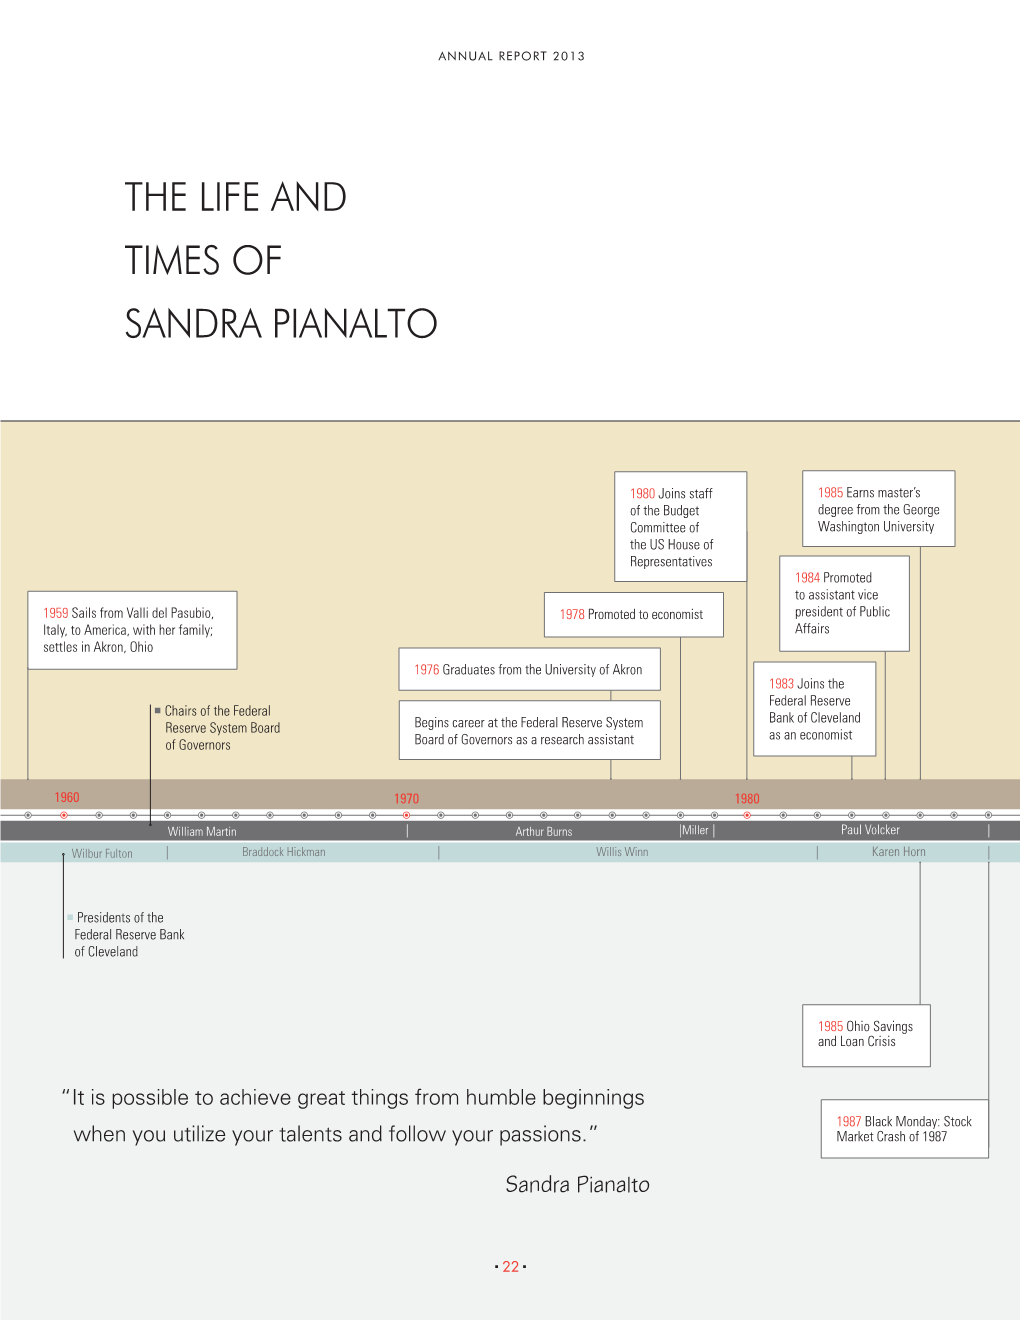 The Life and Times of Sandra Pianalto